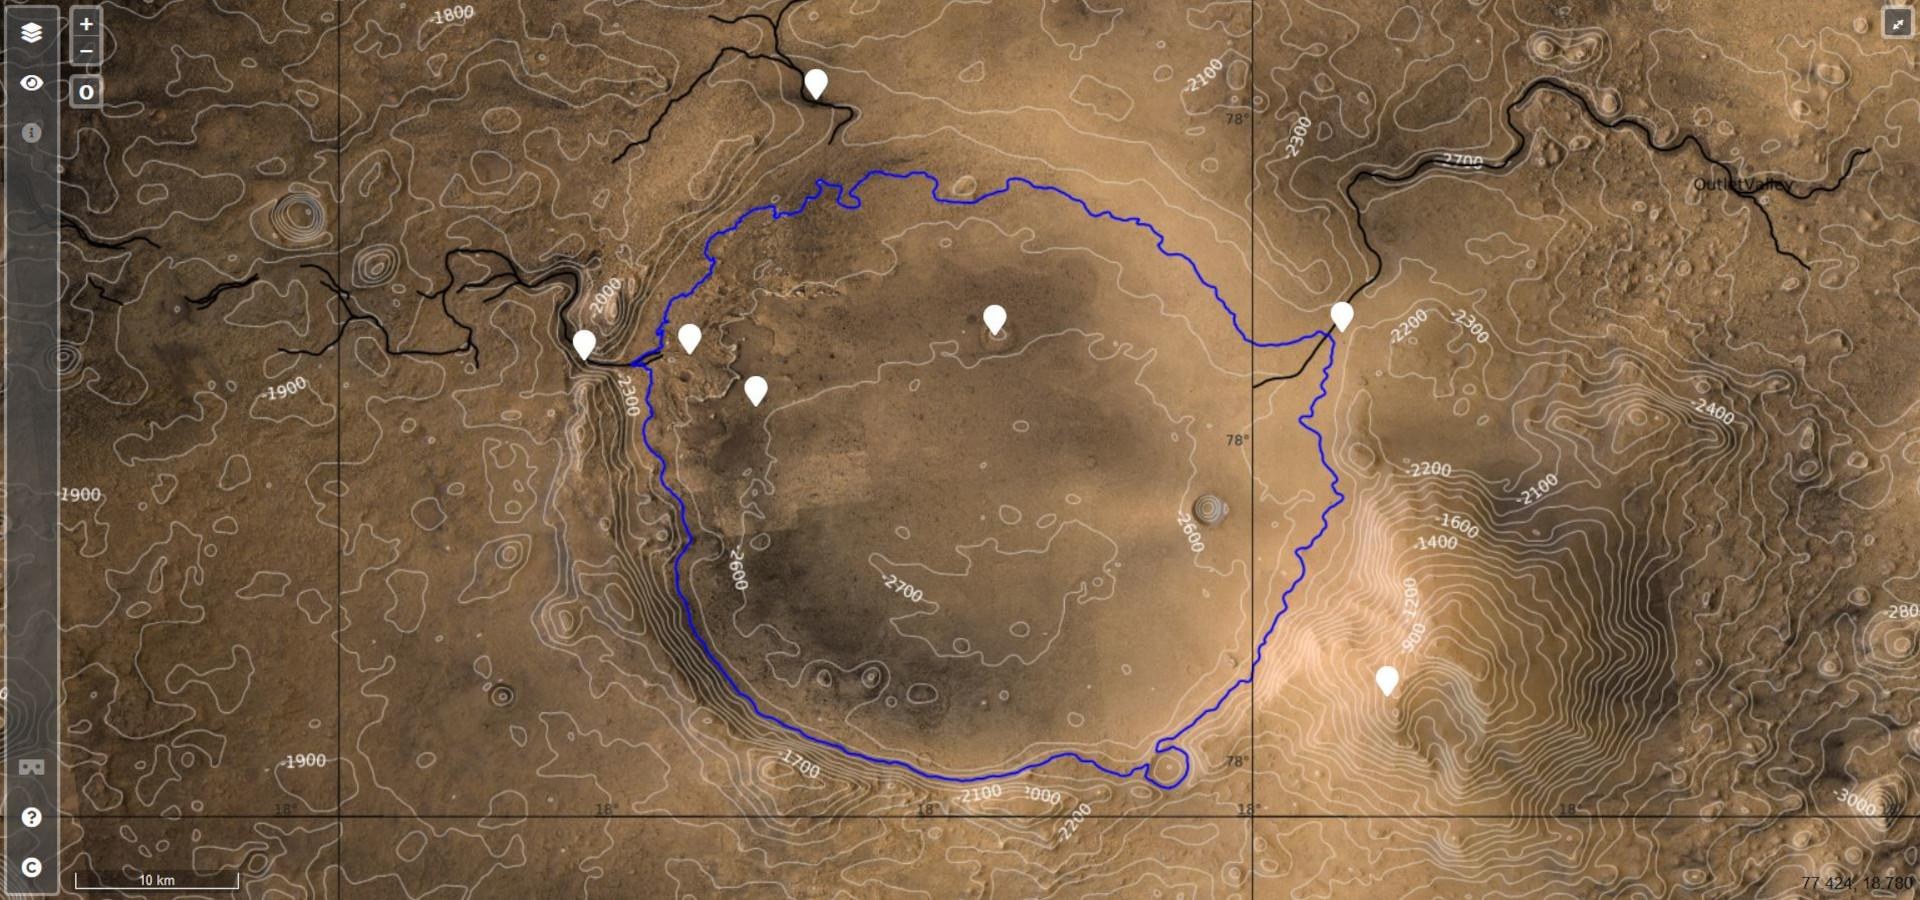 Interaktive Karte des Jezero-Kraters